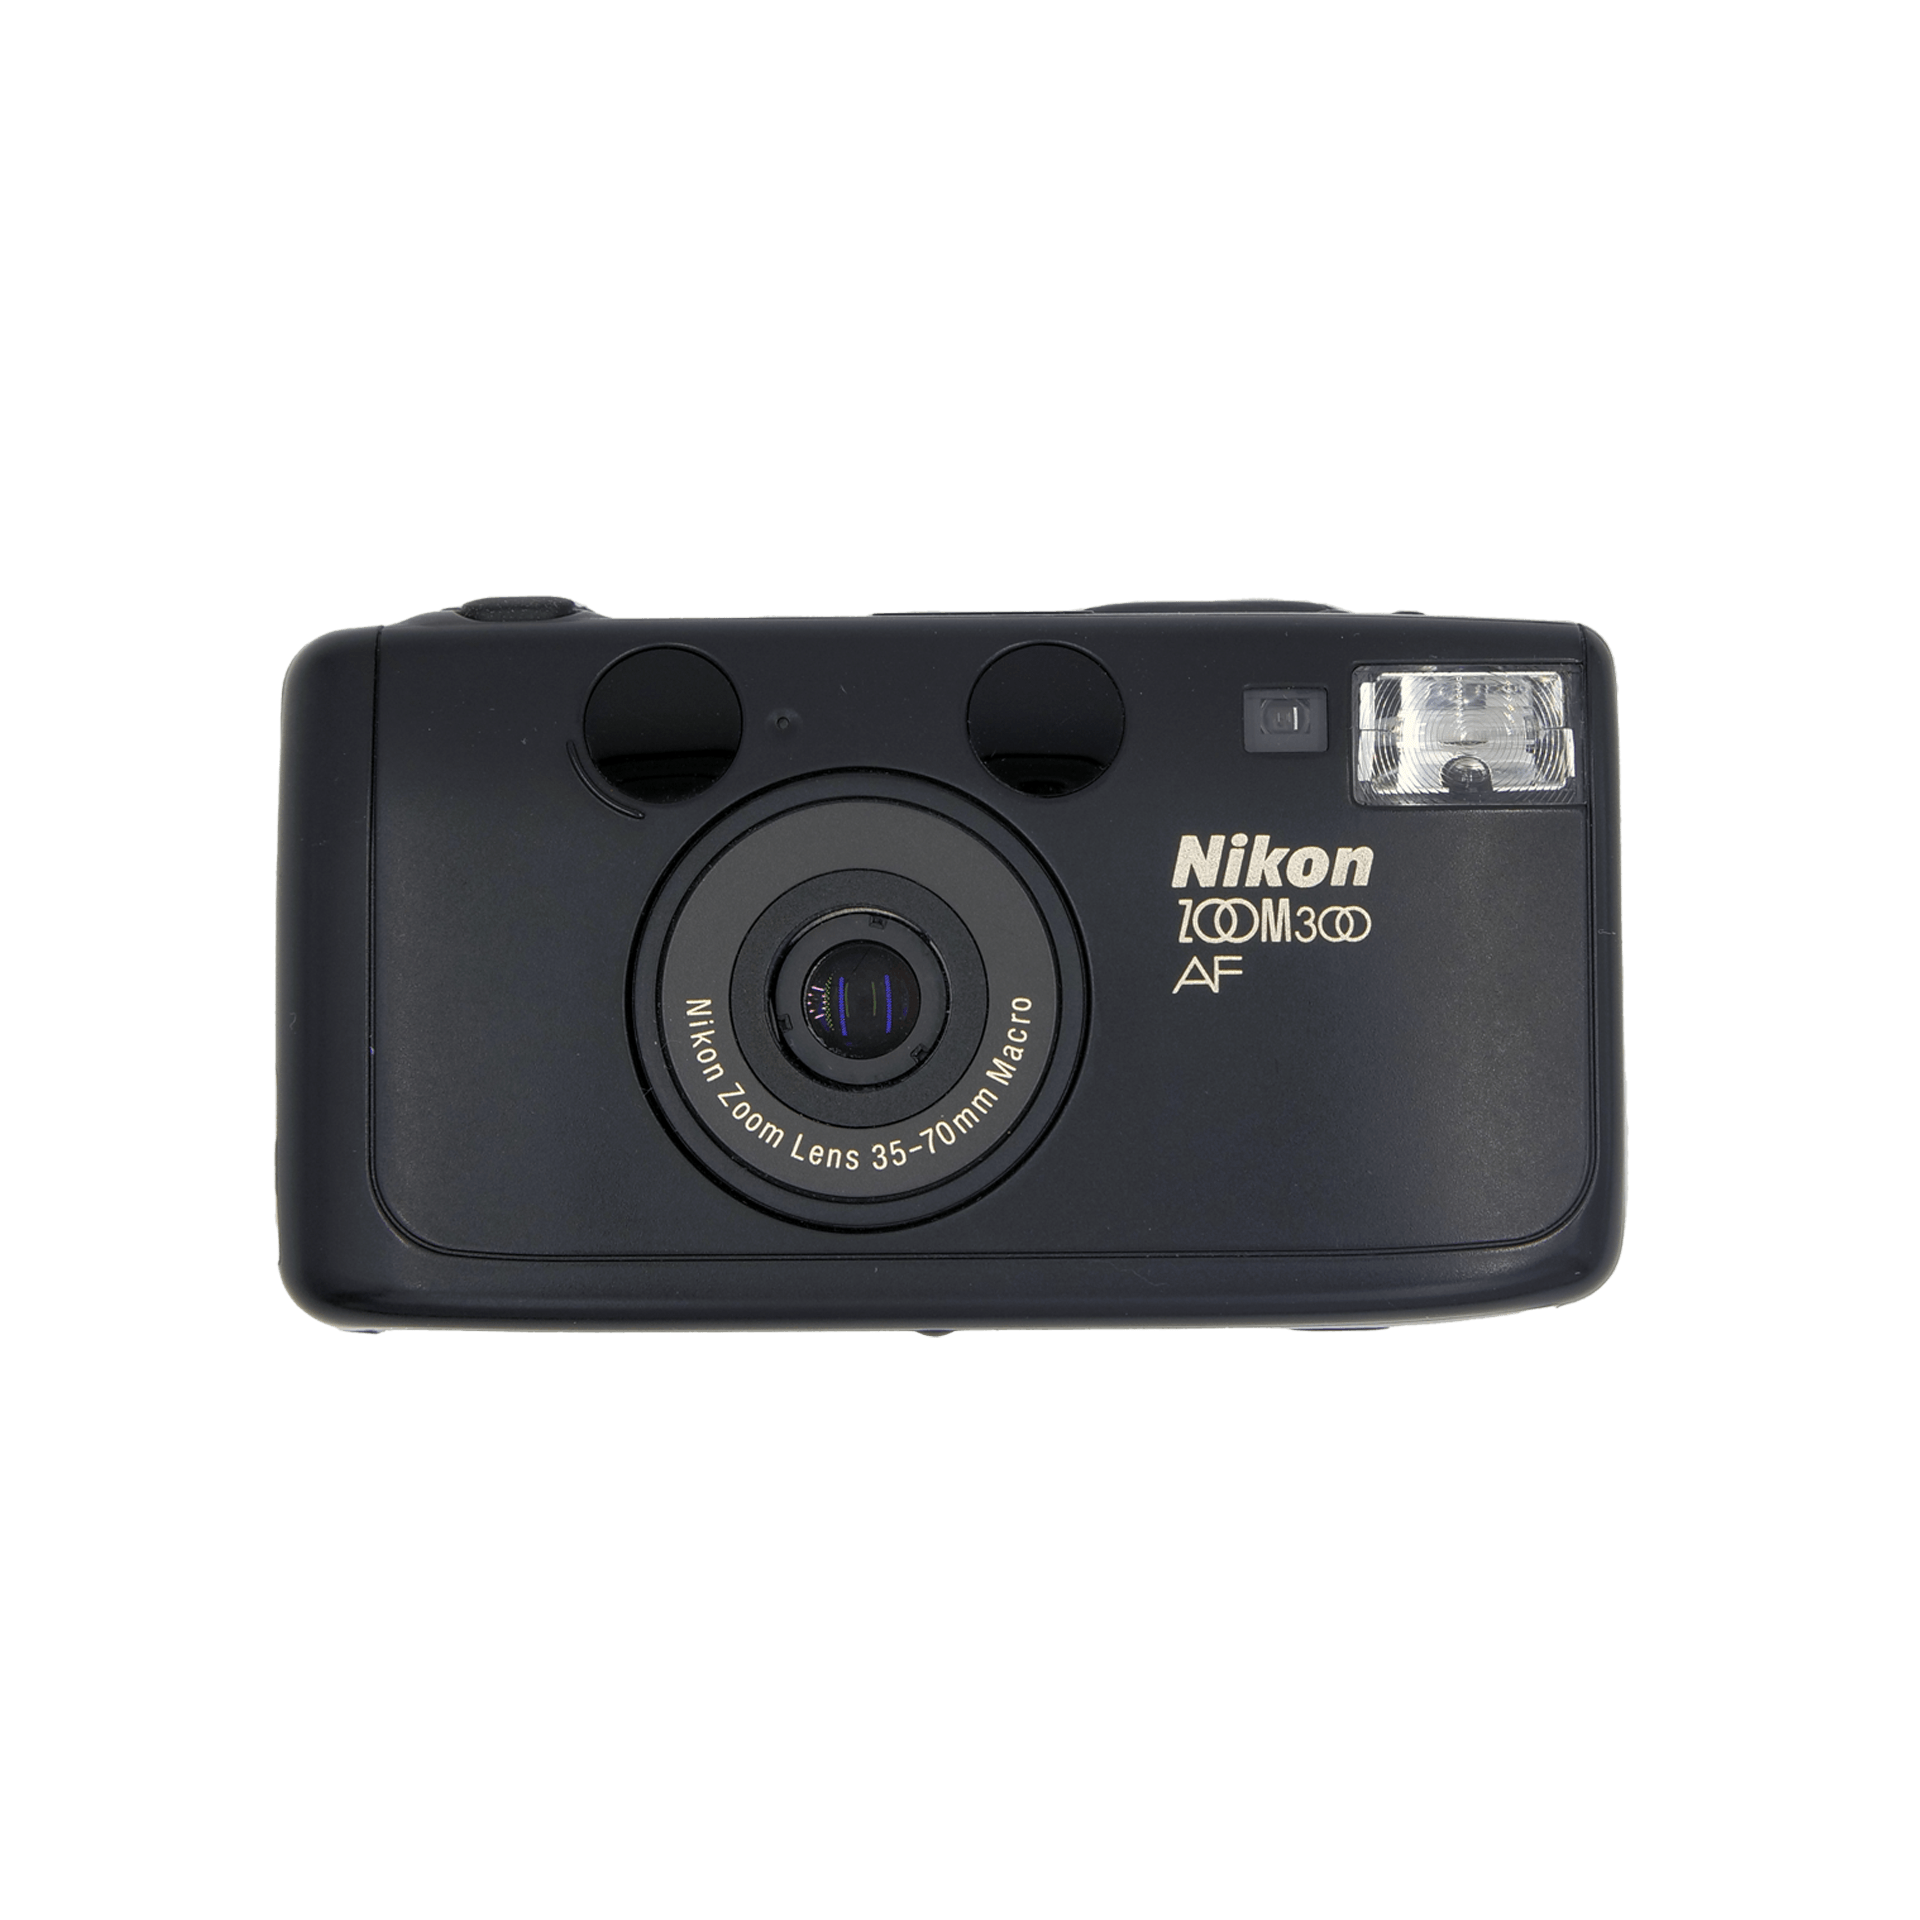 Nikon Zoom 300 AF - grainoverpixel